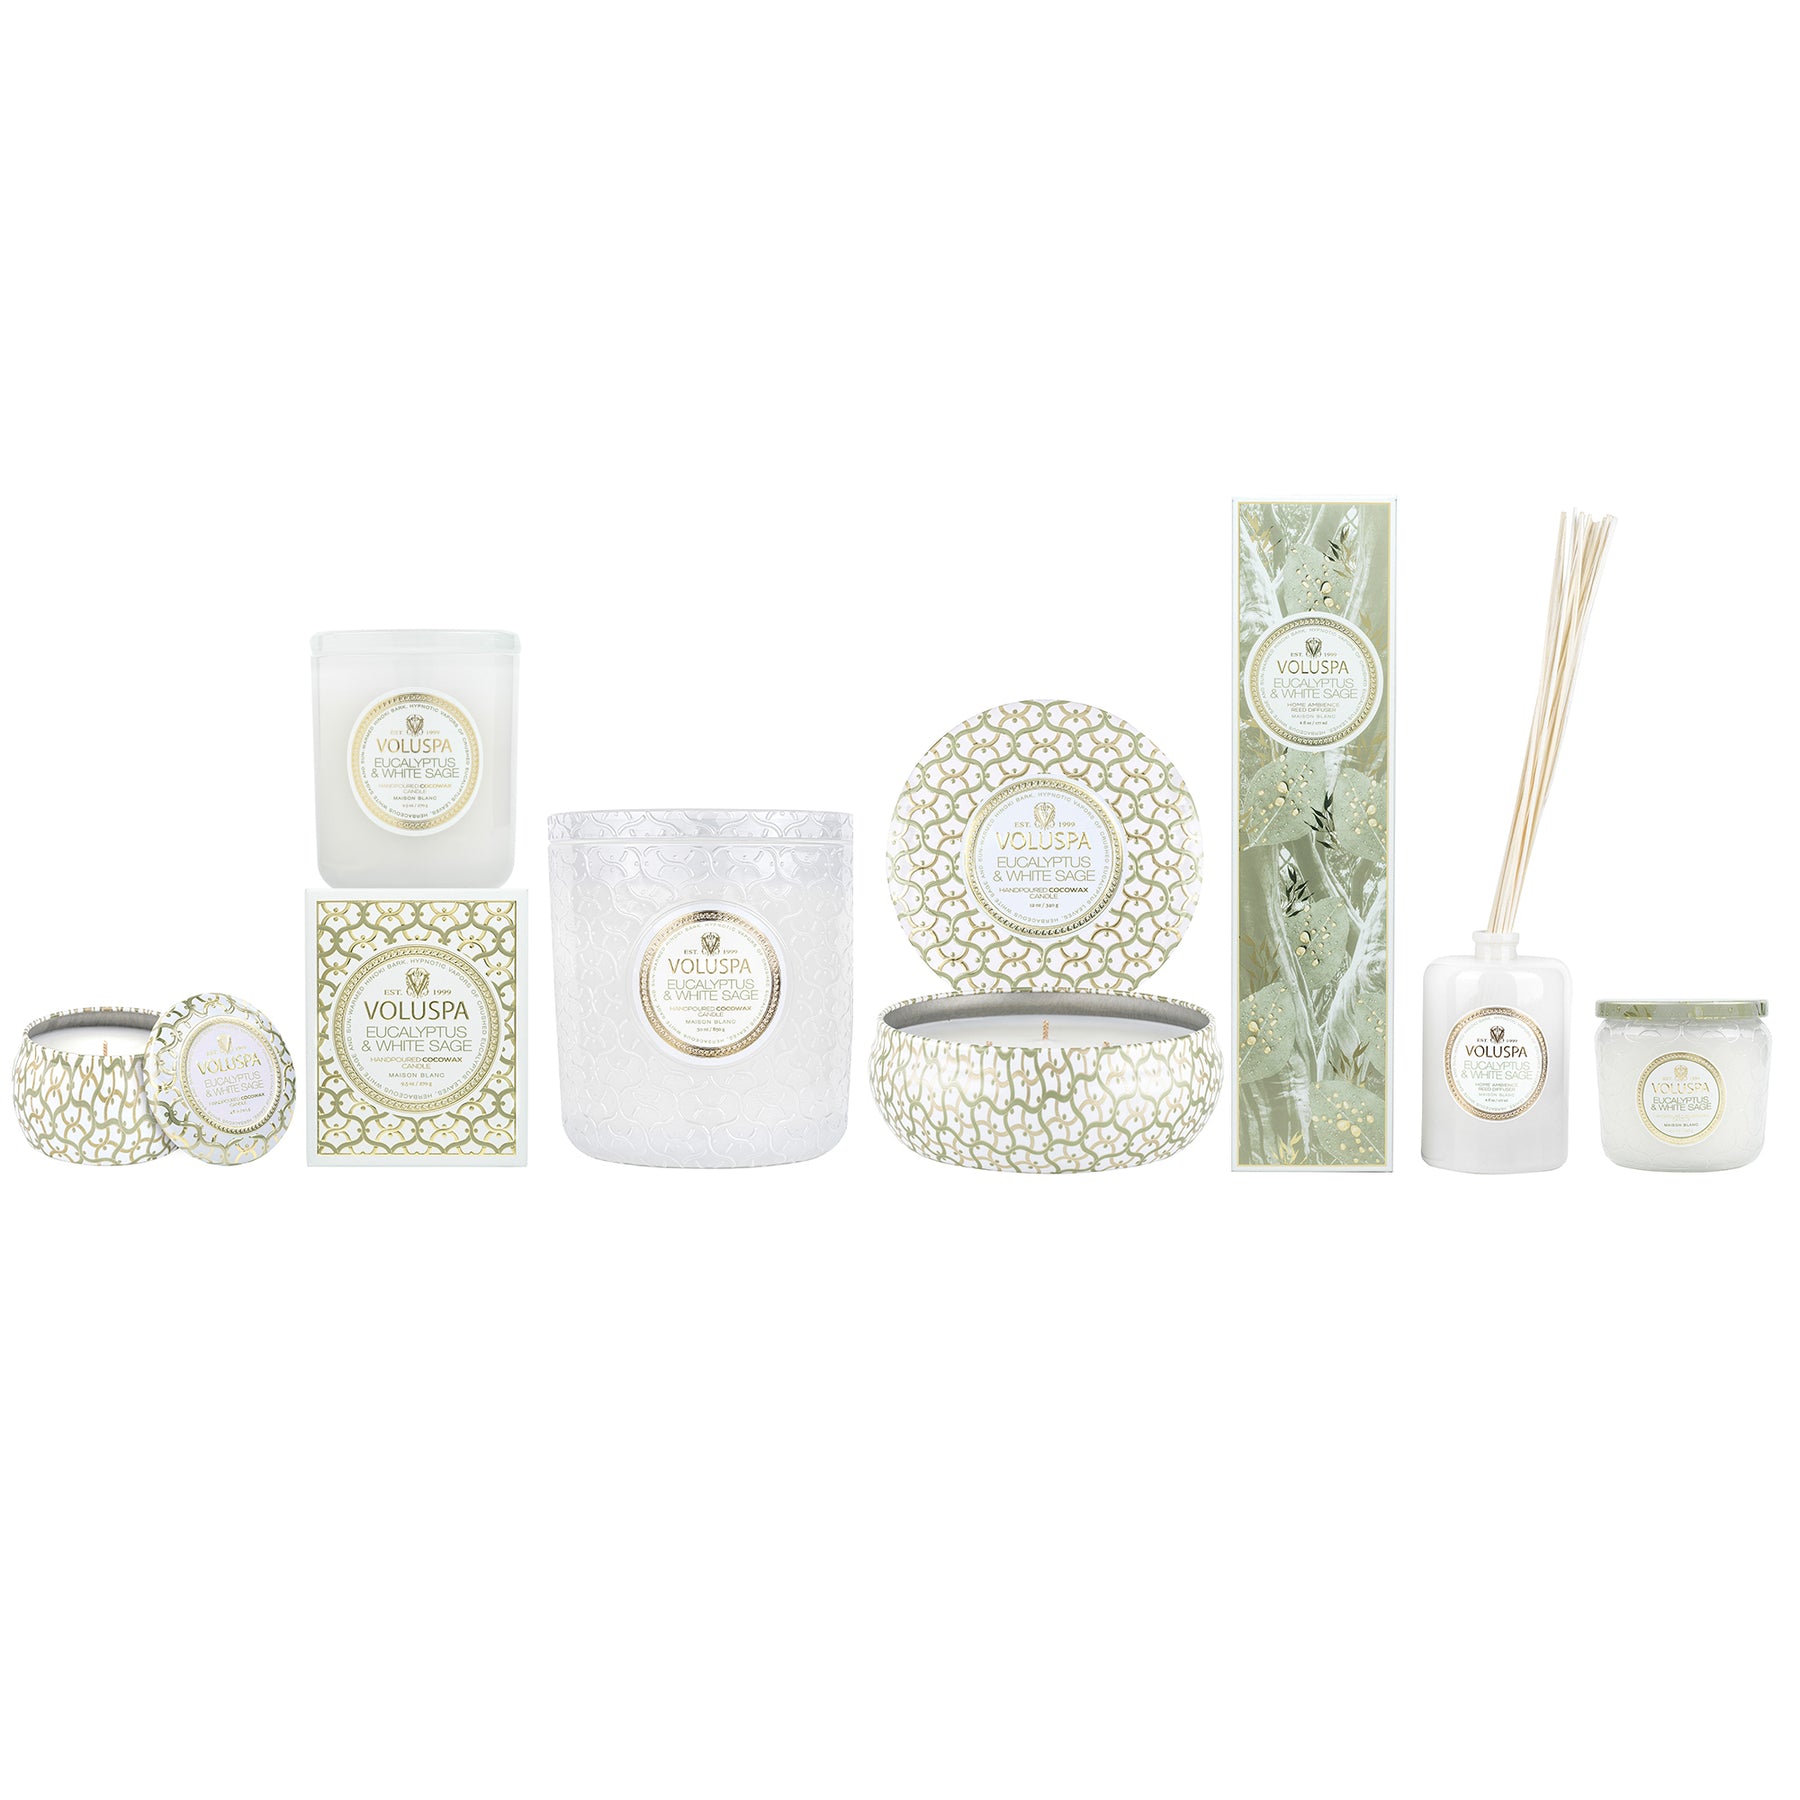 Eucalyptus & White Sage - Collection de parfums